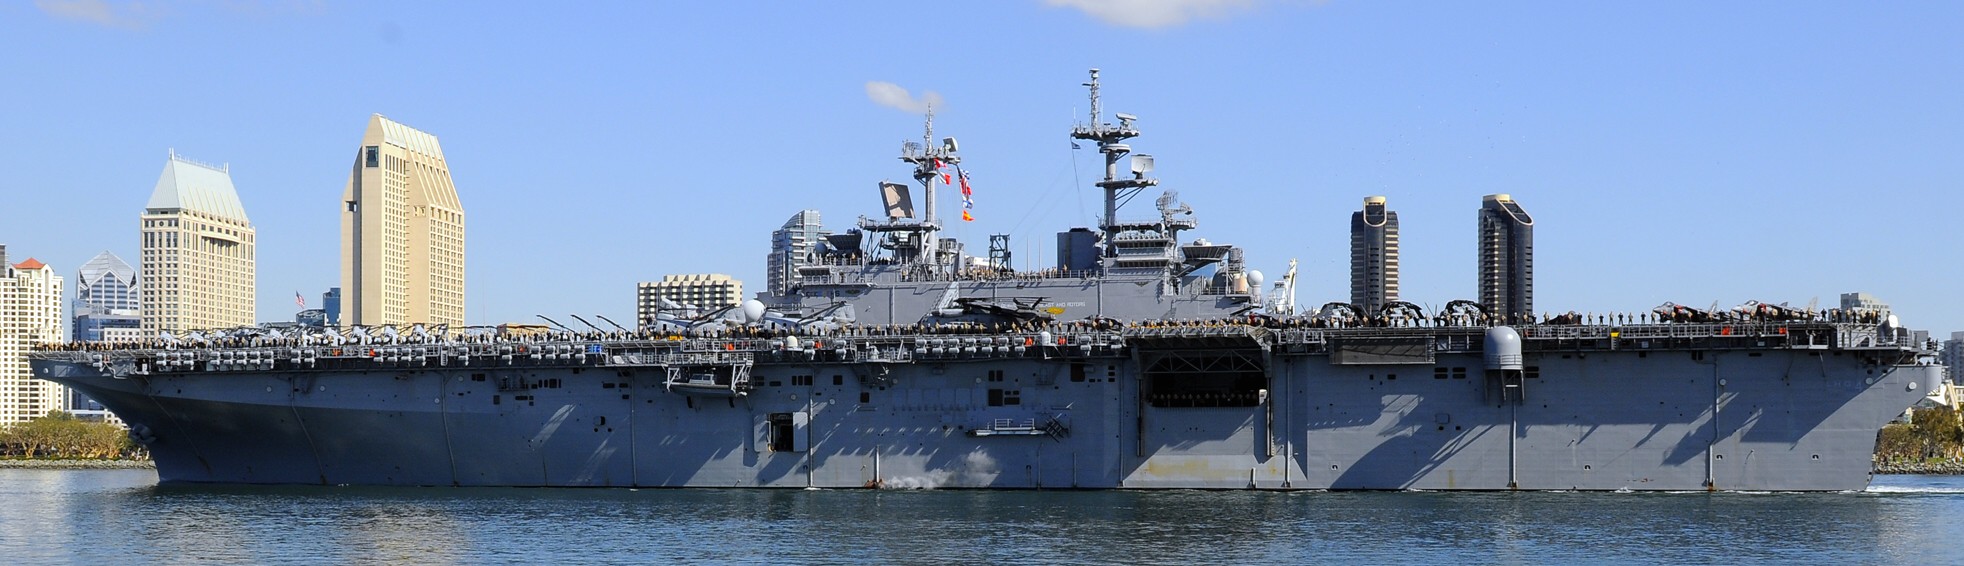 lhd-4 uss boxer wasp class amphibious assault ship dock landing us navy naval base san diego california 47